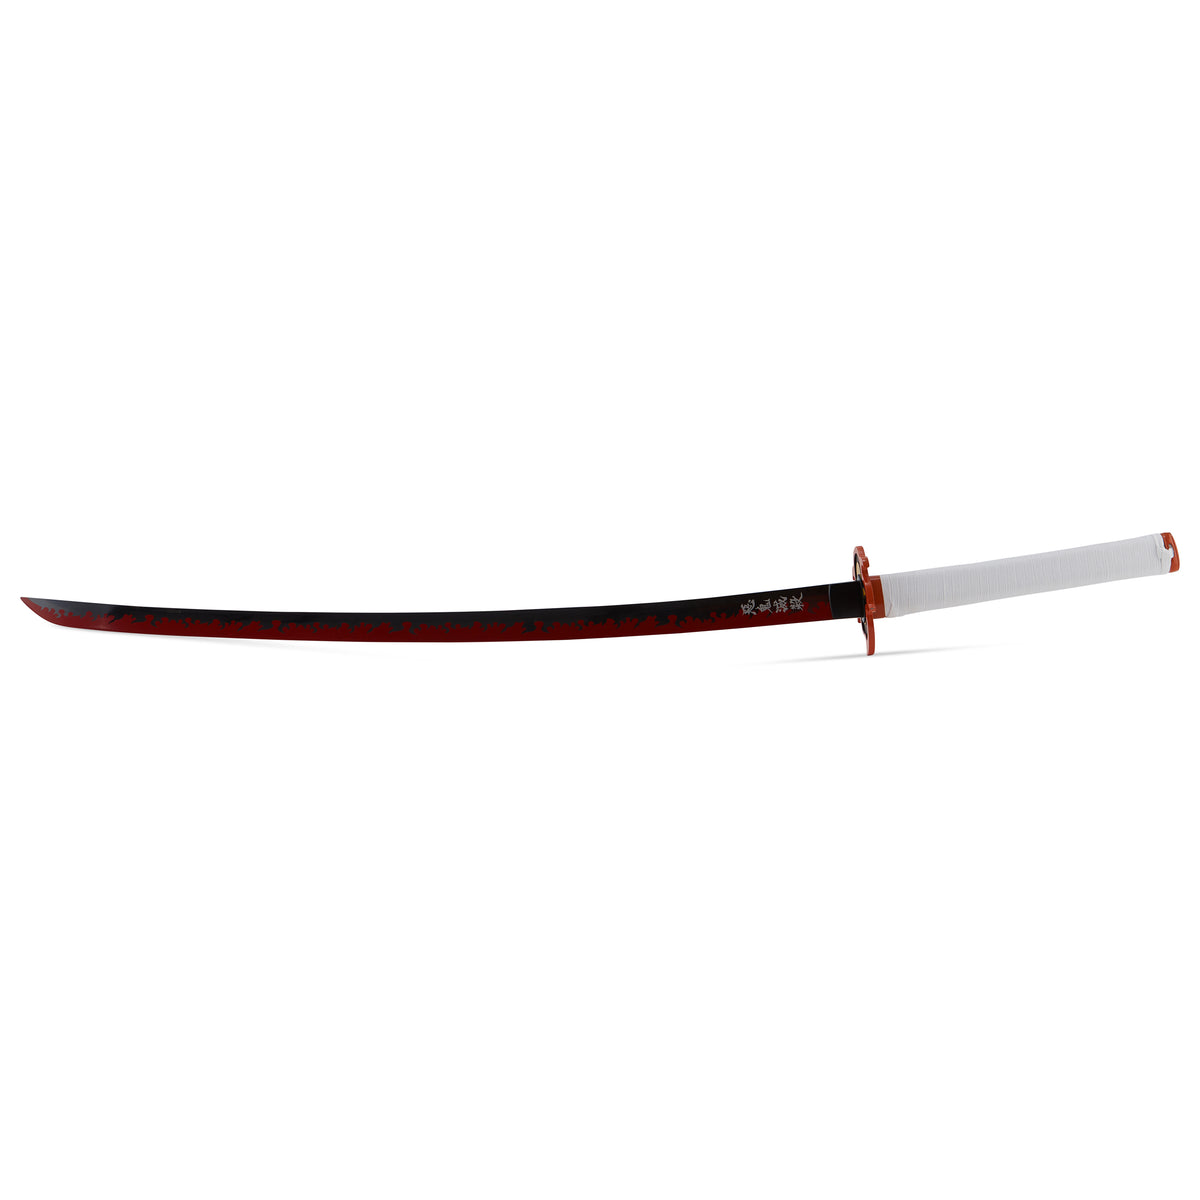 Demon slayer rengoku kyojuro katana sword replica